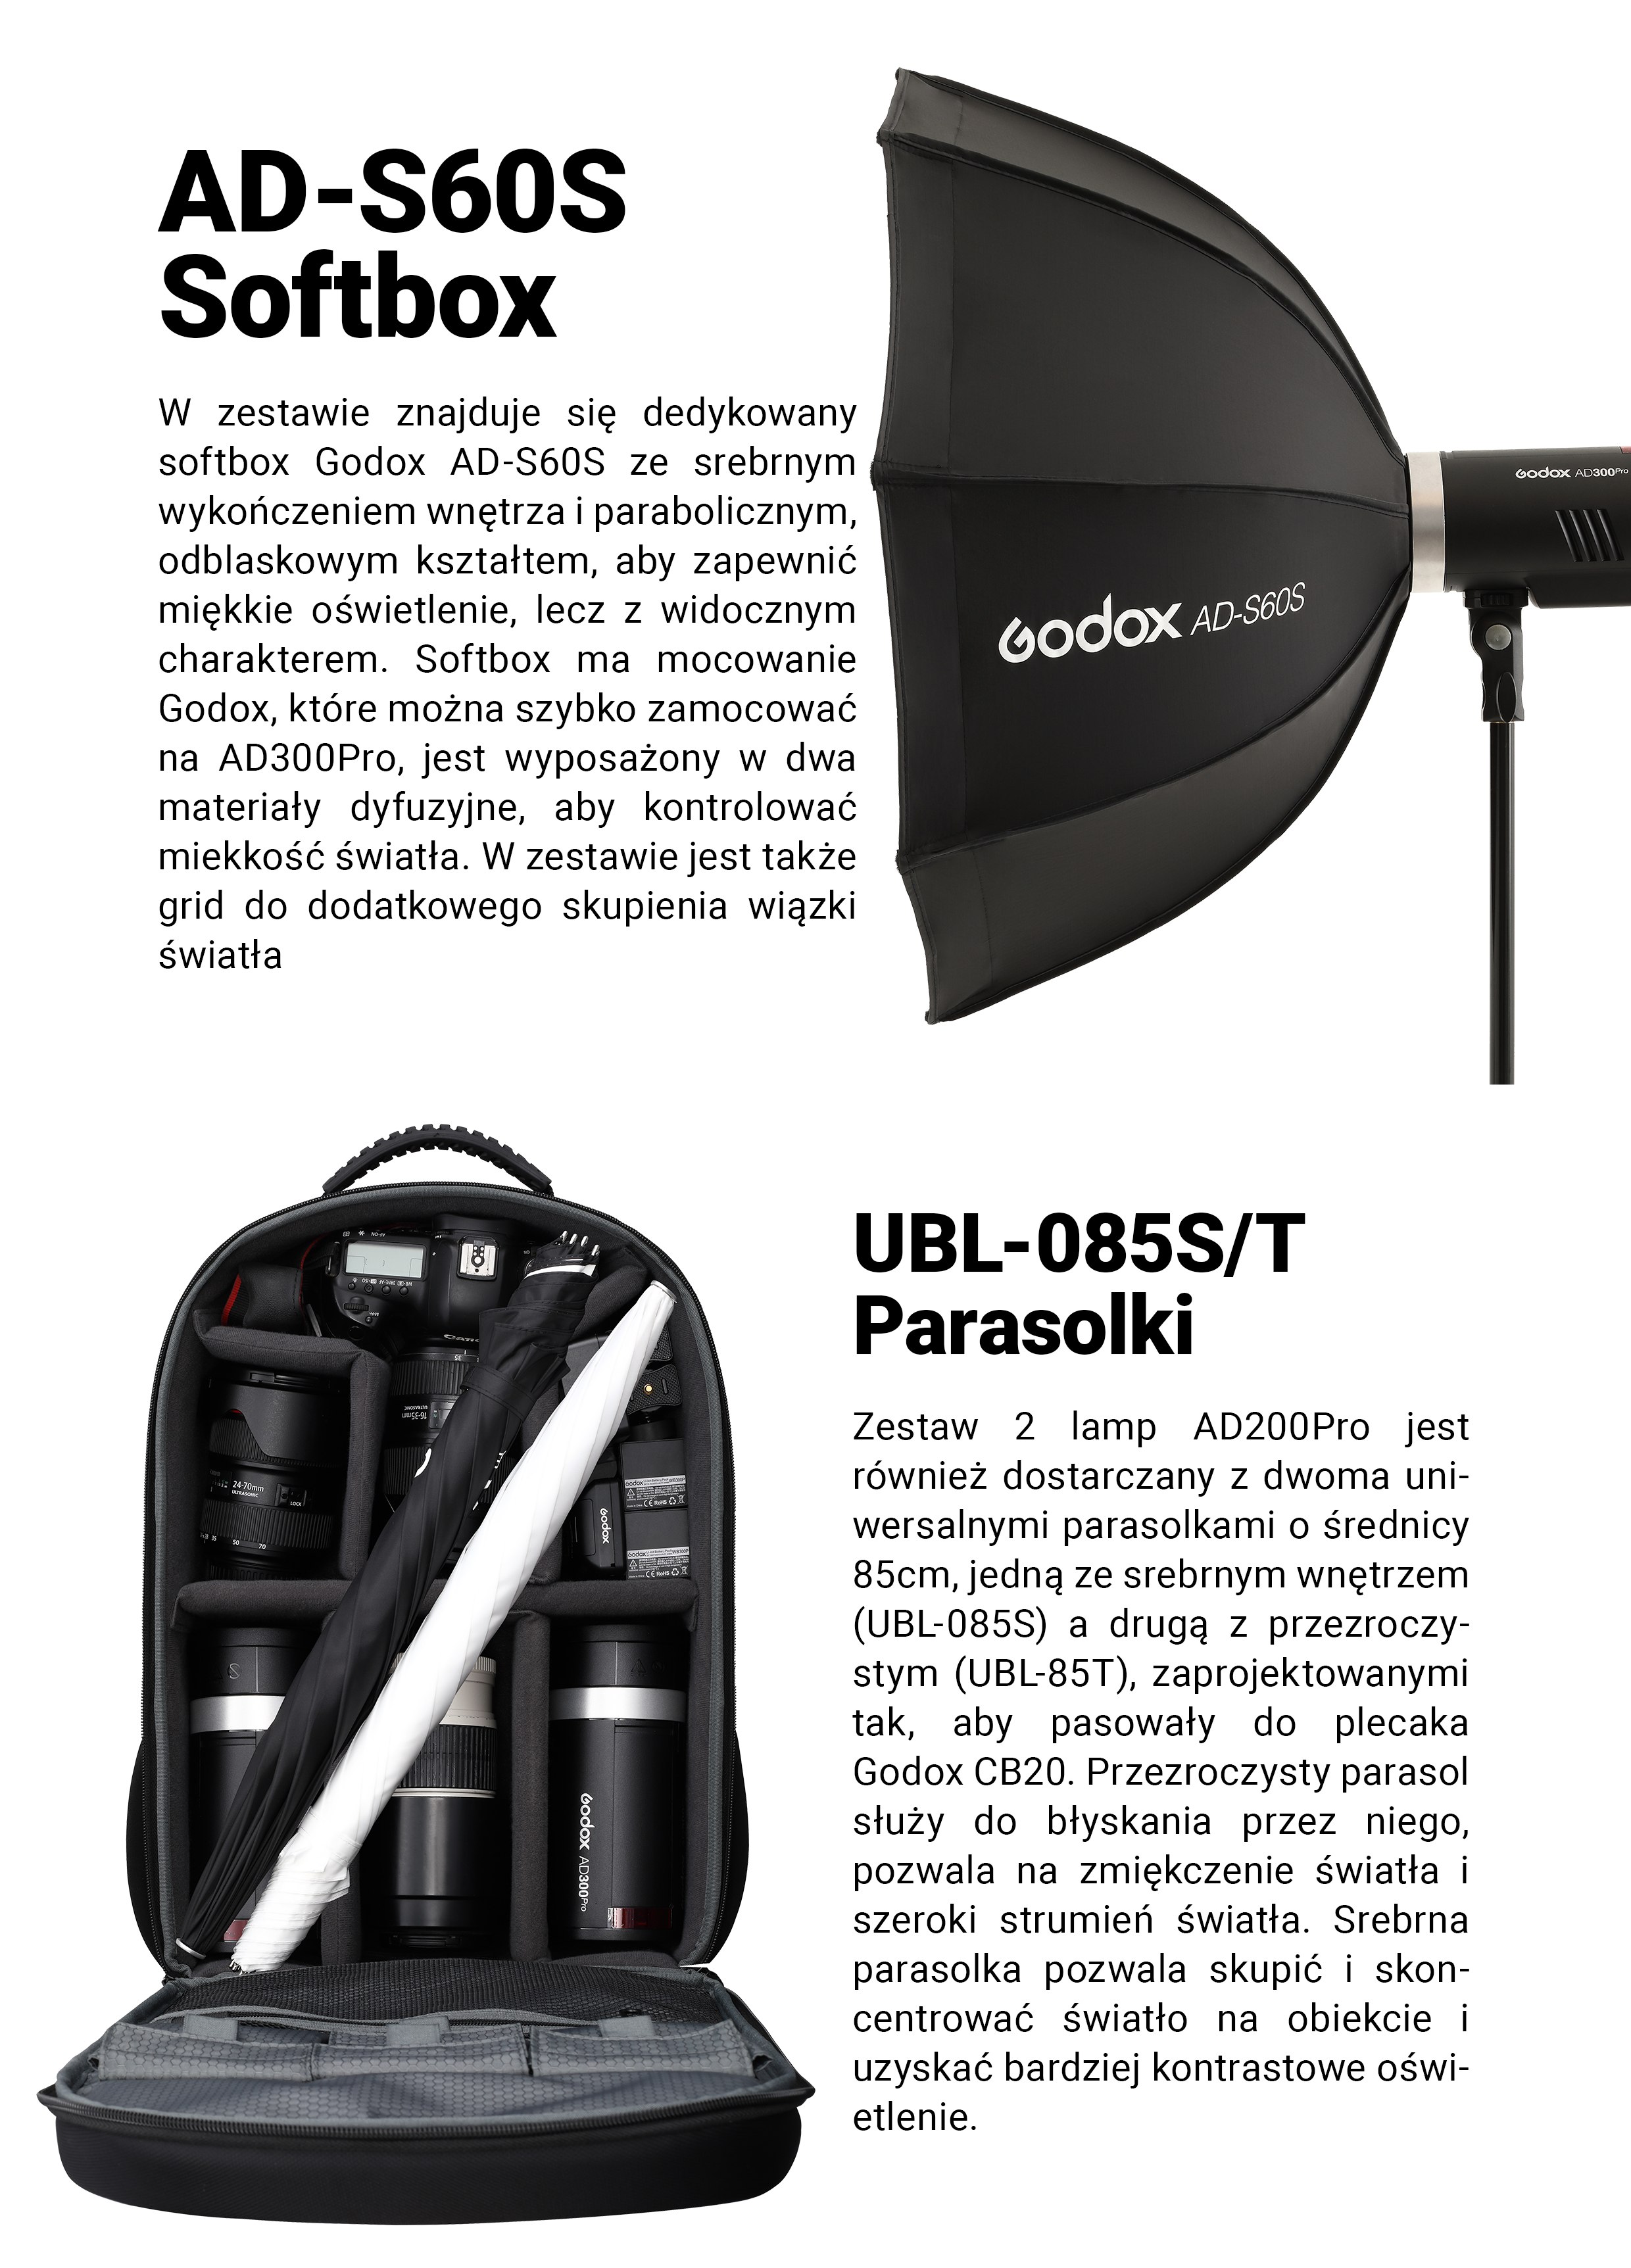 Godox AD-S60S Softbox, UBL-085S/T Parasolki